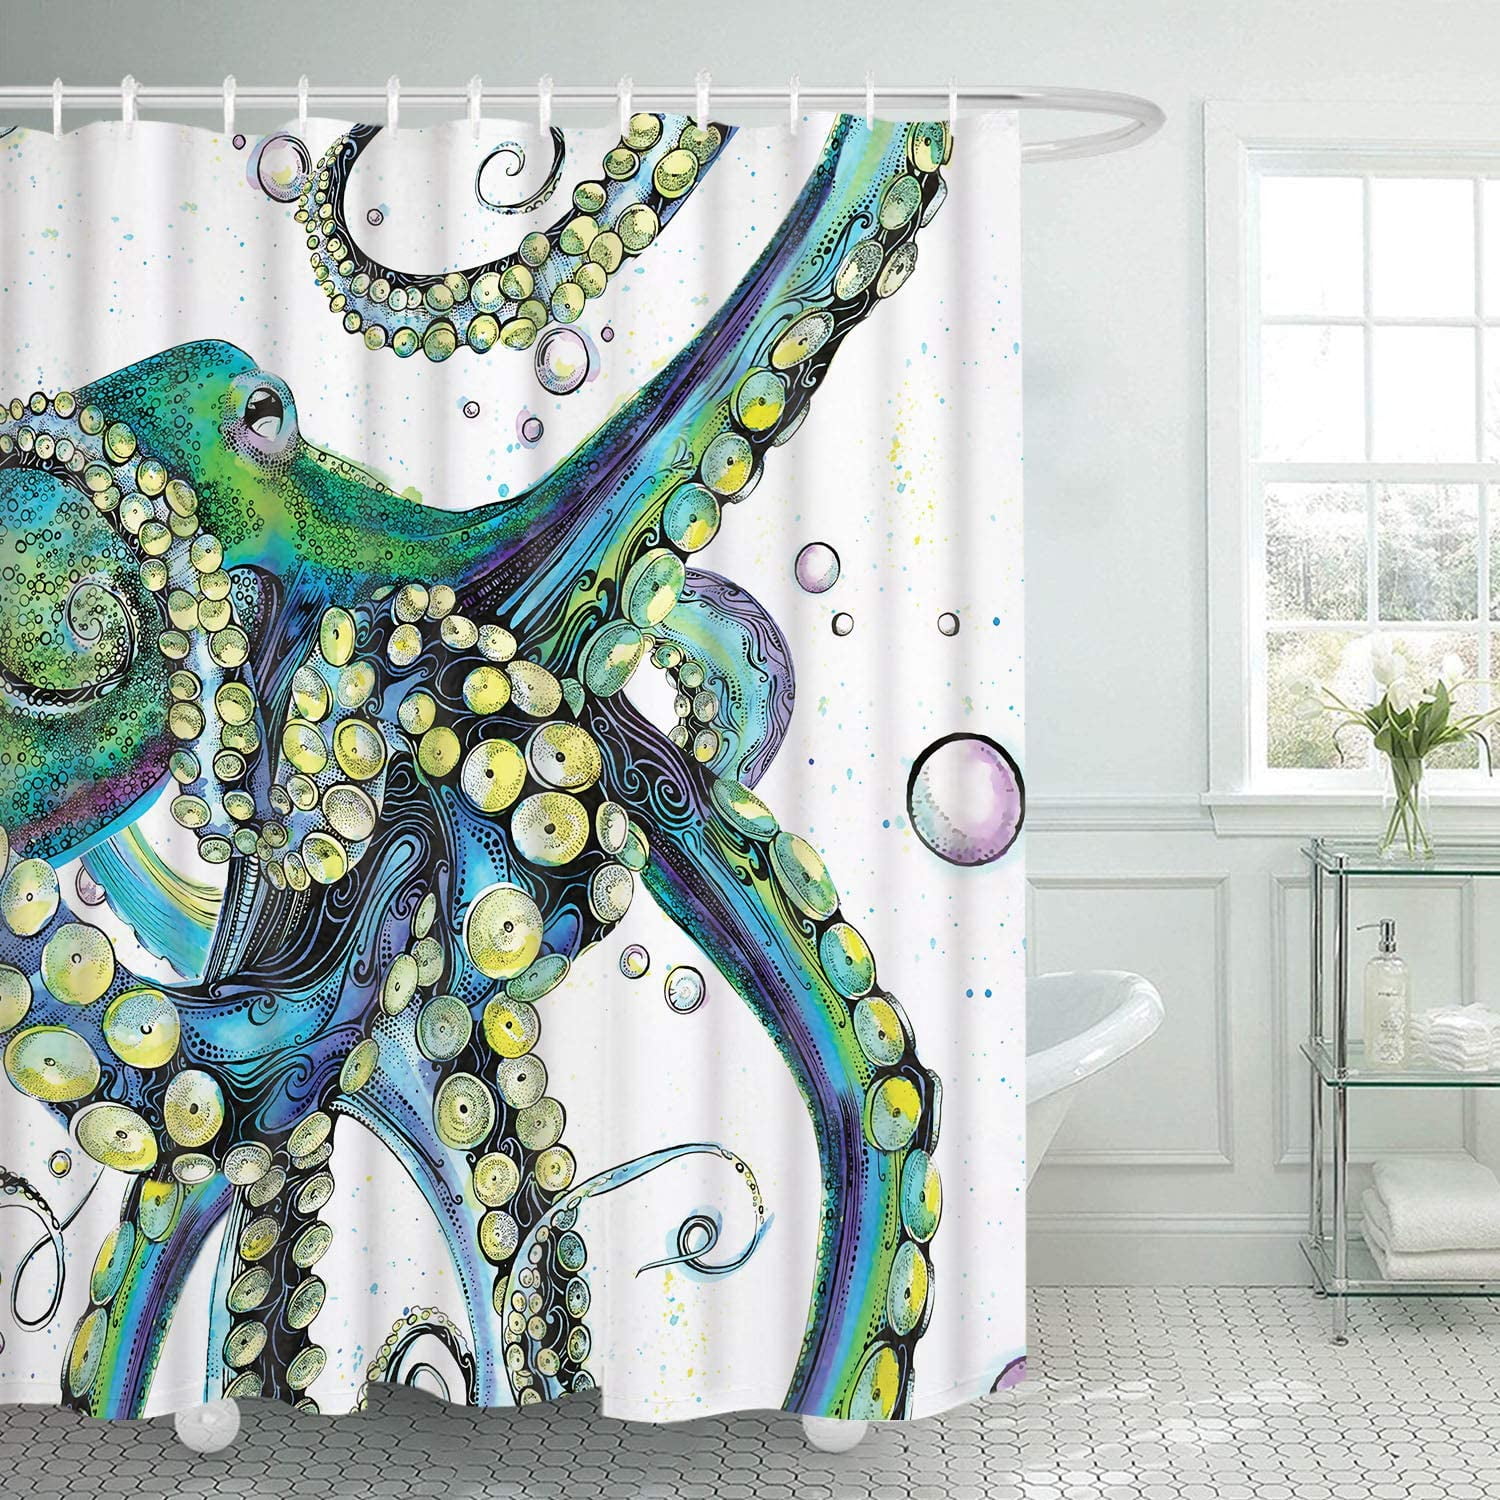 180x180cm Egyptian mural Waterproof Fabric Shower Curtain Bathroom home decor 